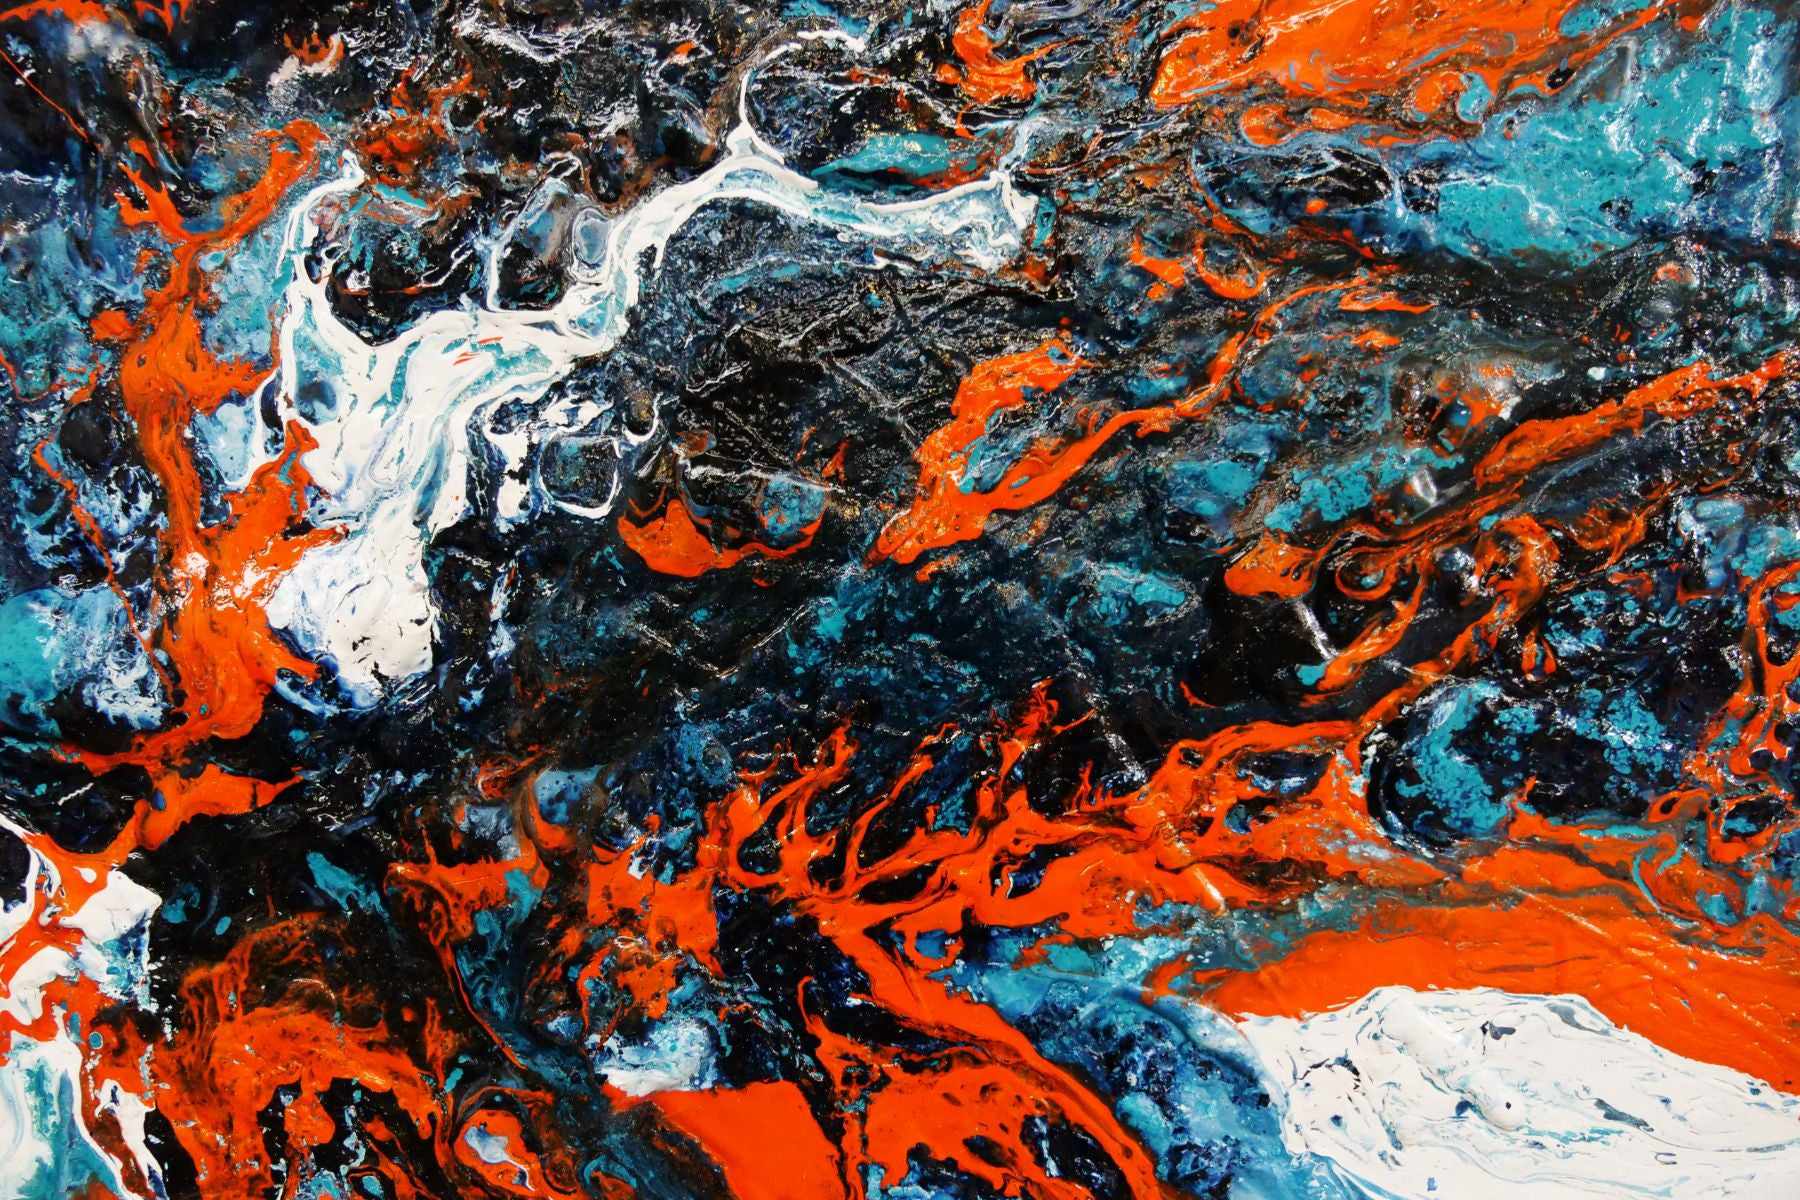 Wild Aquatica 190cm x 100cm Turquoise Orange Textured Abstract Painting (SOLD)